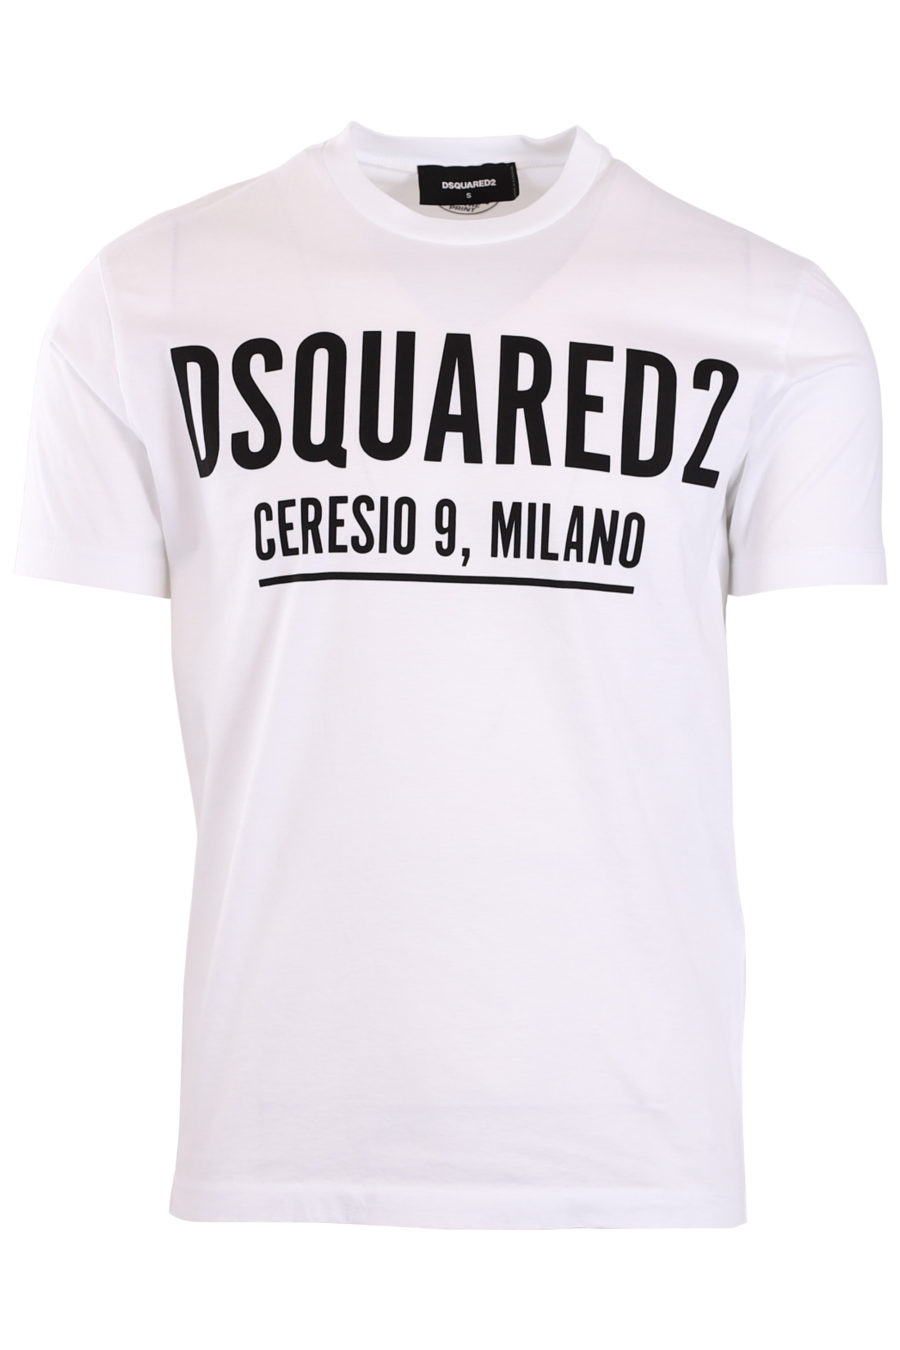 Camiseta blanca manga corta "Ceresio" - IMG 9275